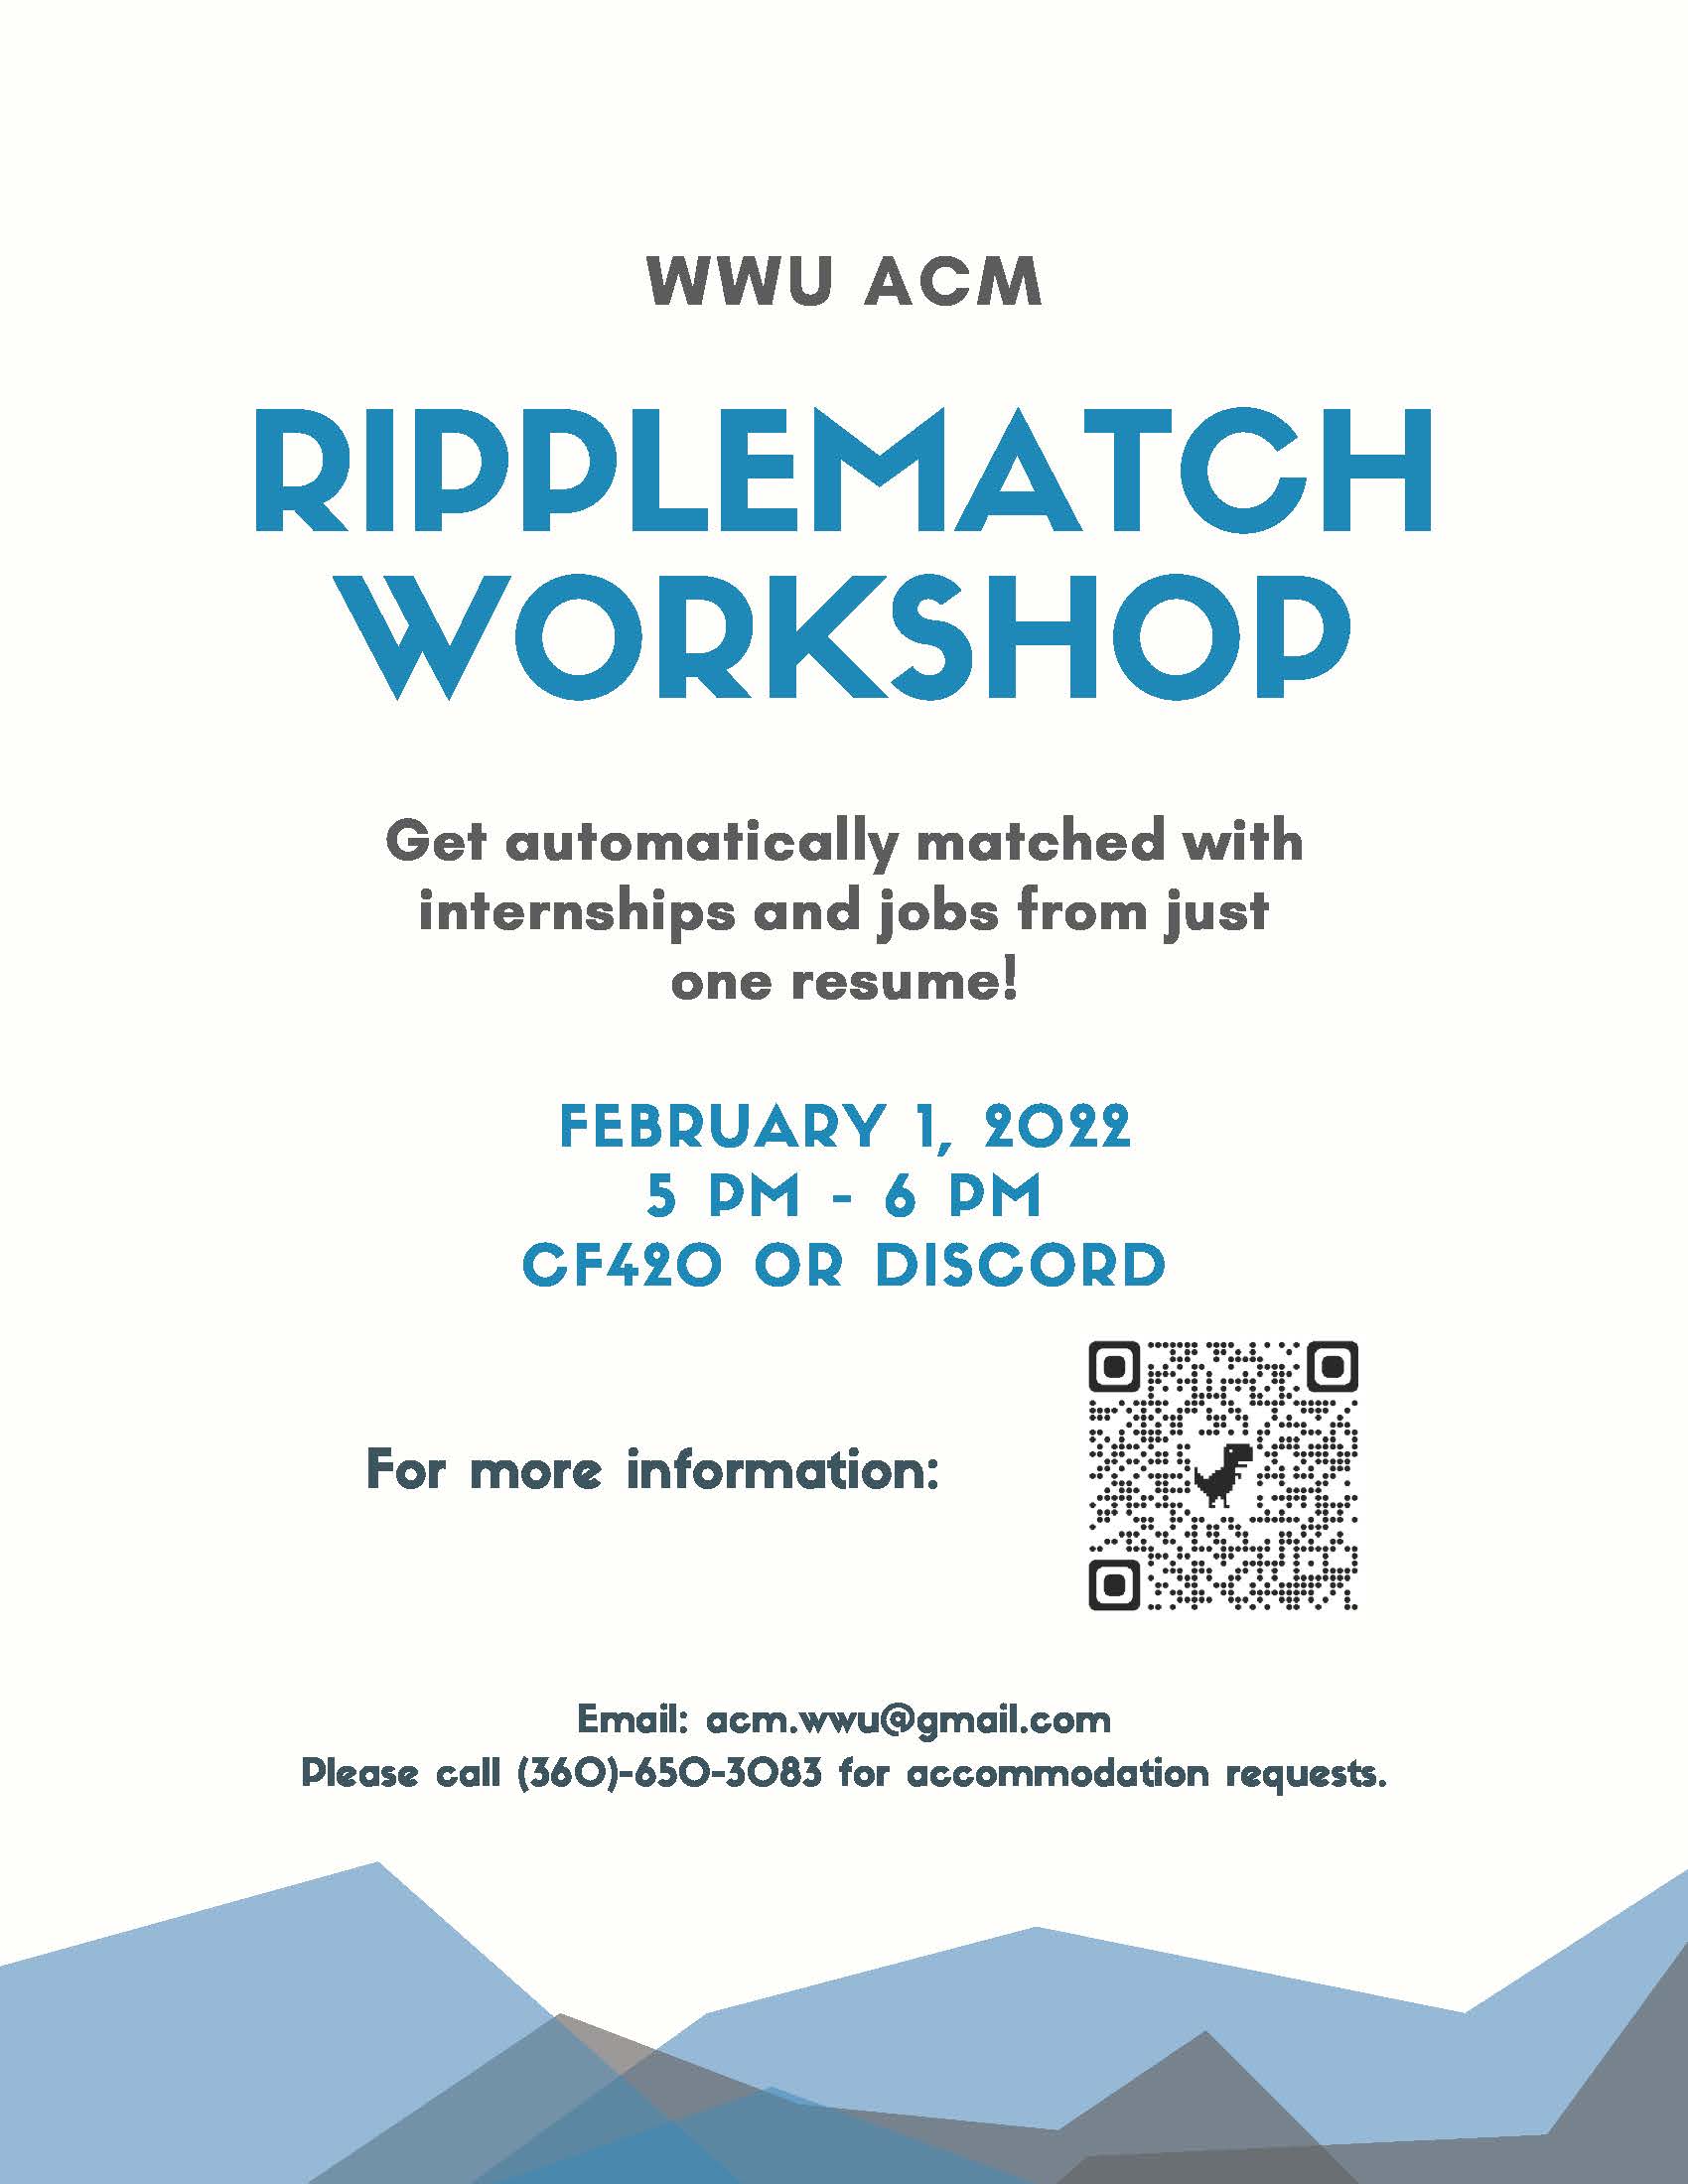 Event poster for Ripplematch Workshop